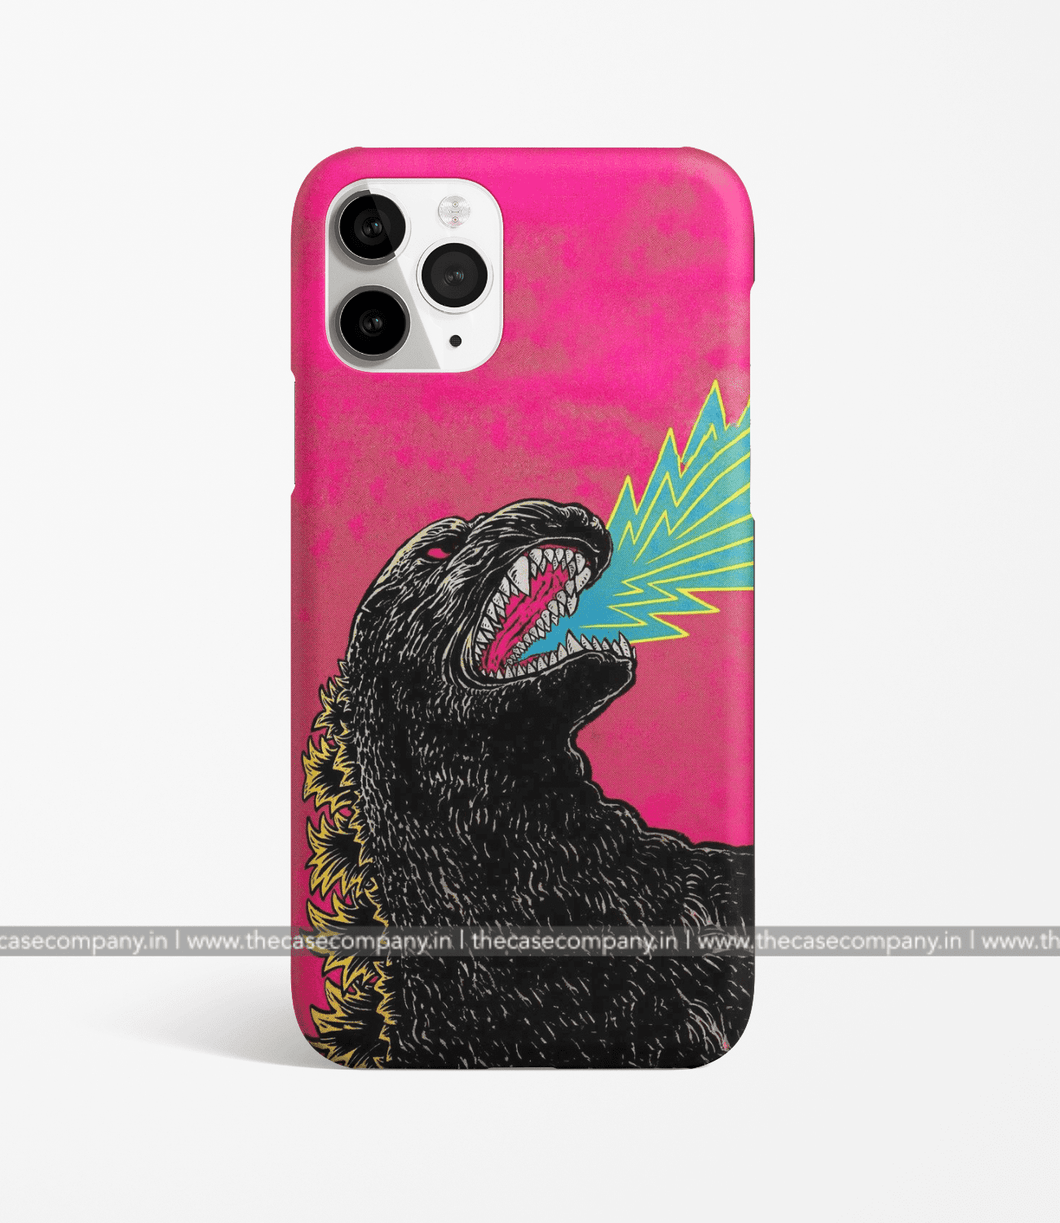 Angry Godzilla Phone Case